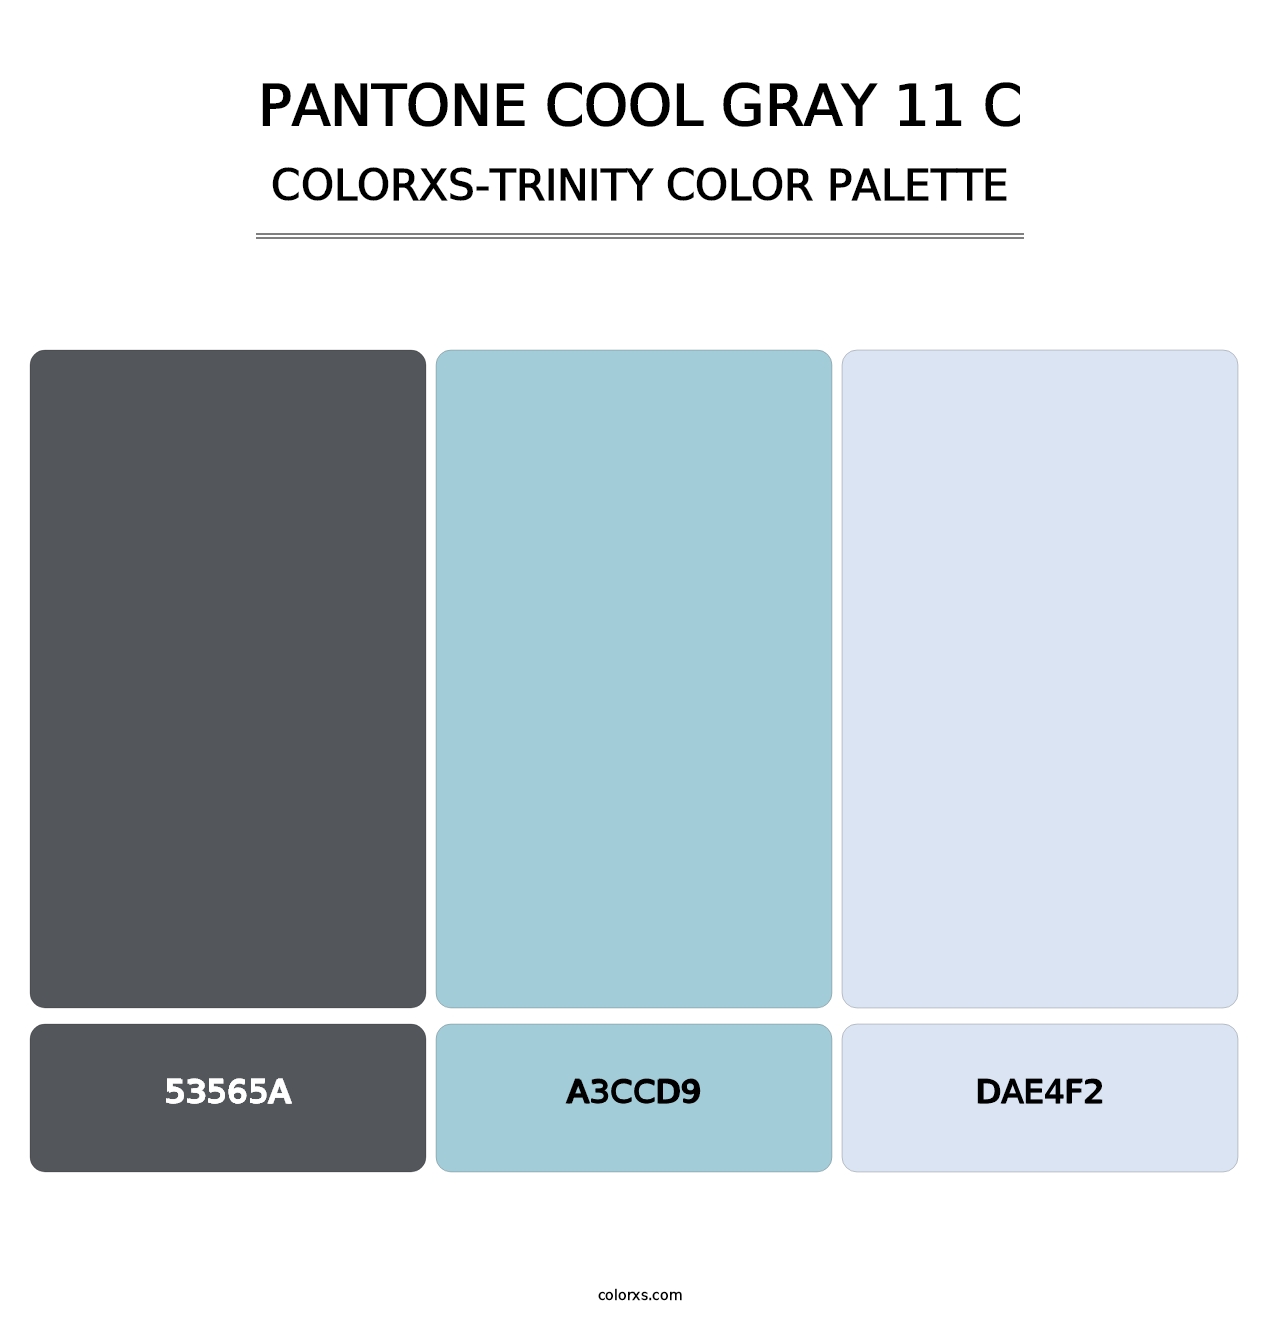 PANTONE Cool Gray 11 C - Colorxs Trinity Palette